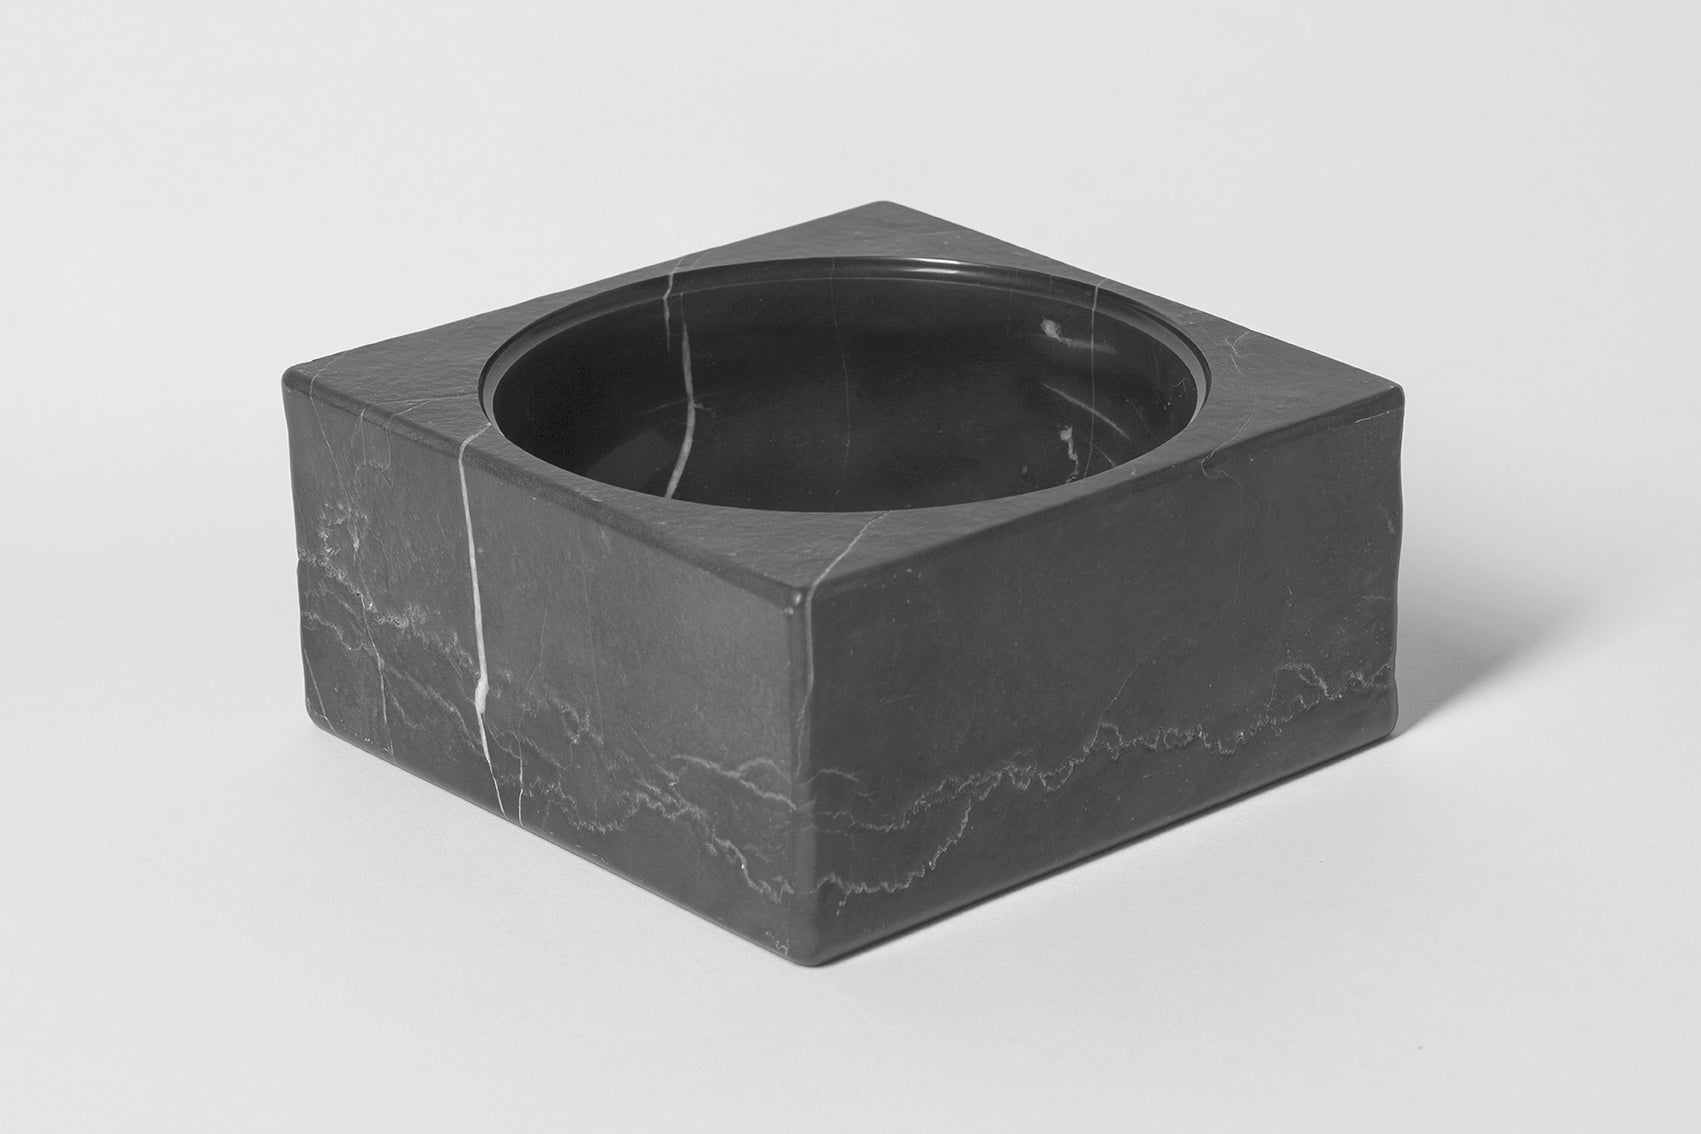 Poul Kjaerholm marble bowl